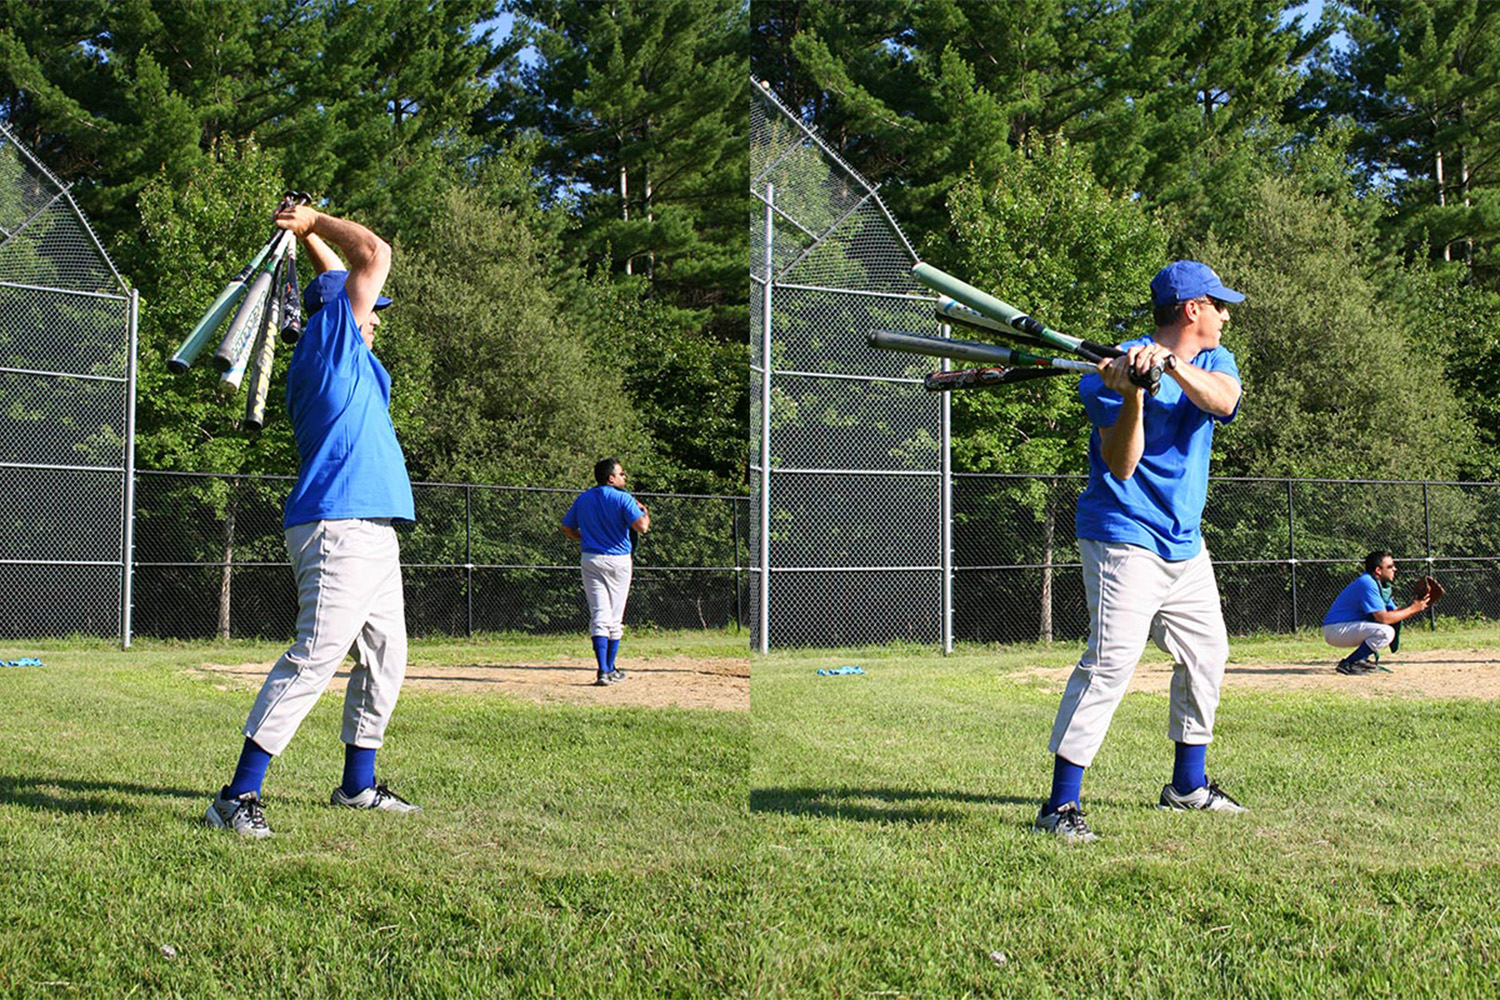 Joe Ferolito swinging around baseball bats 